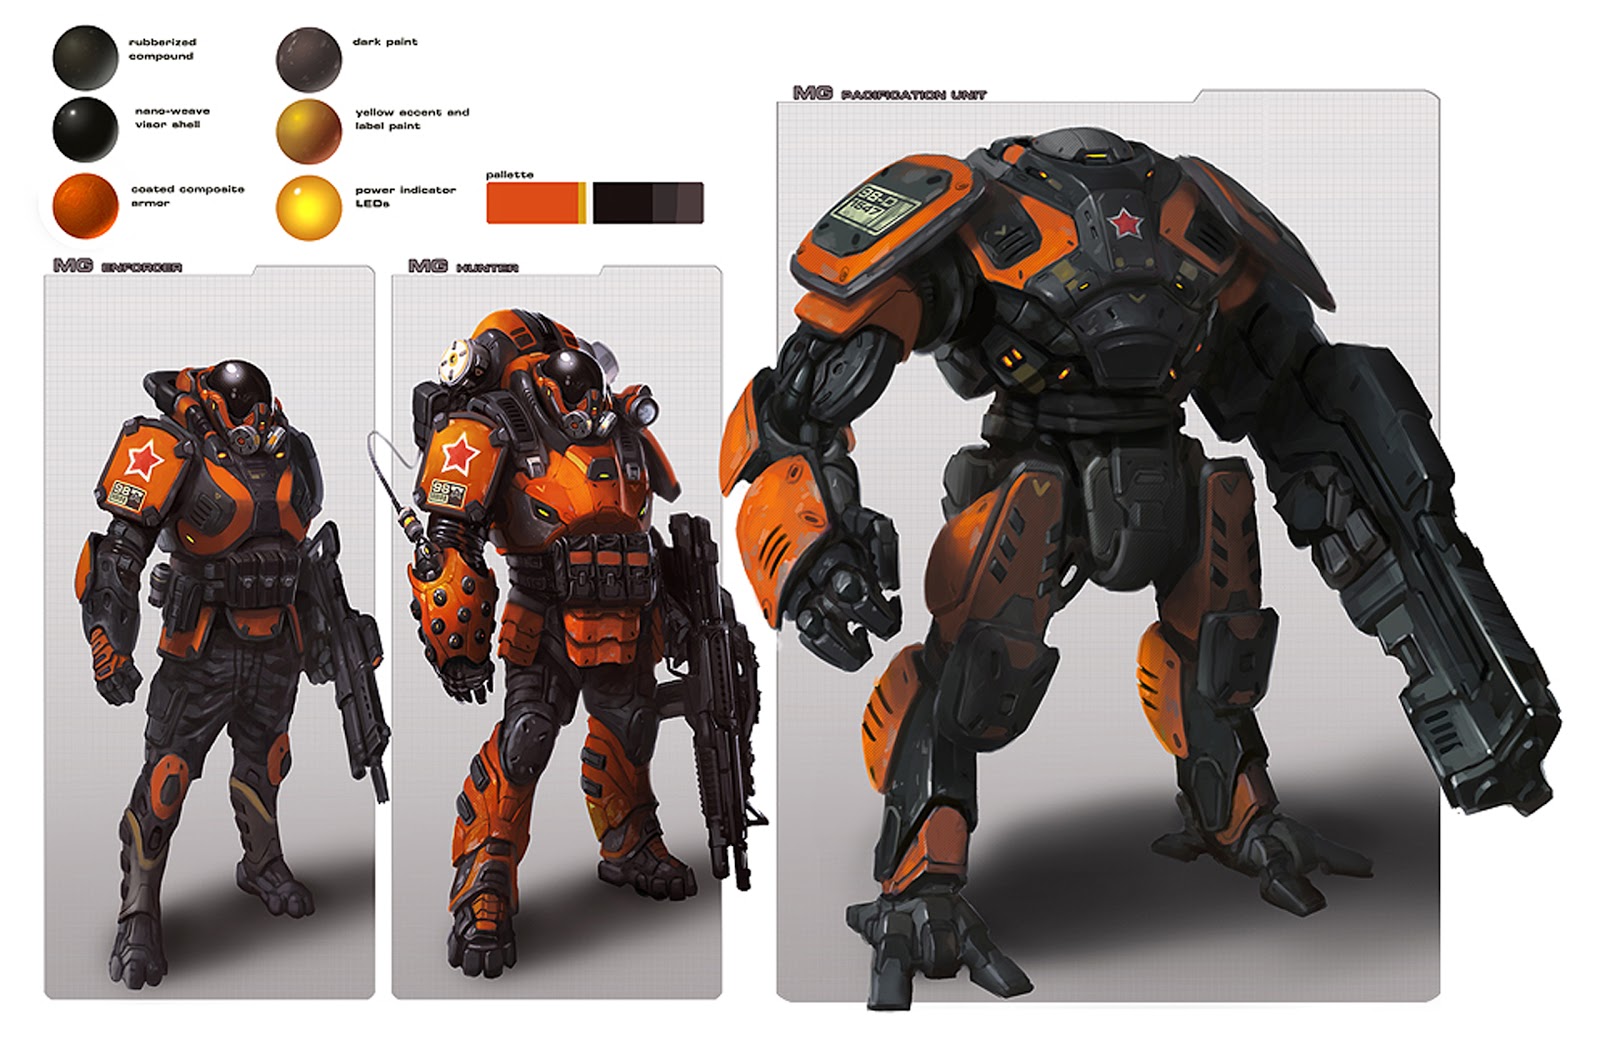 blaze+orange+daryl+mandryk+concept+art+soldier+exo+suit+combat+armor+mech+mecha+blaster+laser+rifle+gun+cannon+snow+warrior+sci+fi.jpg